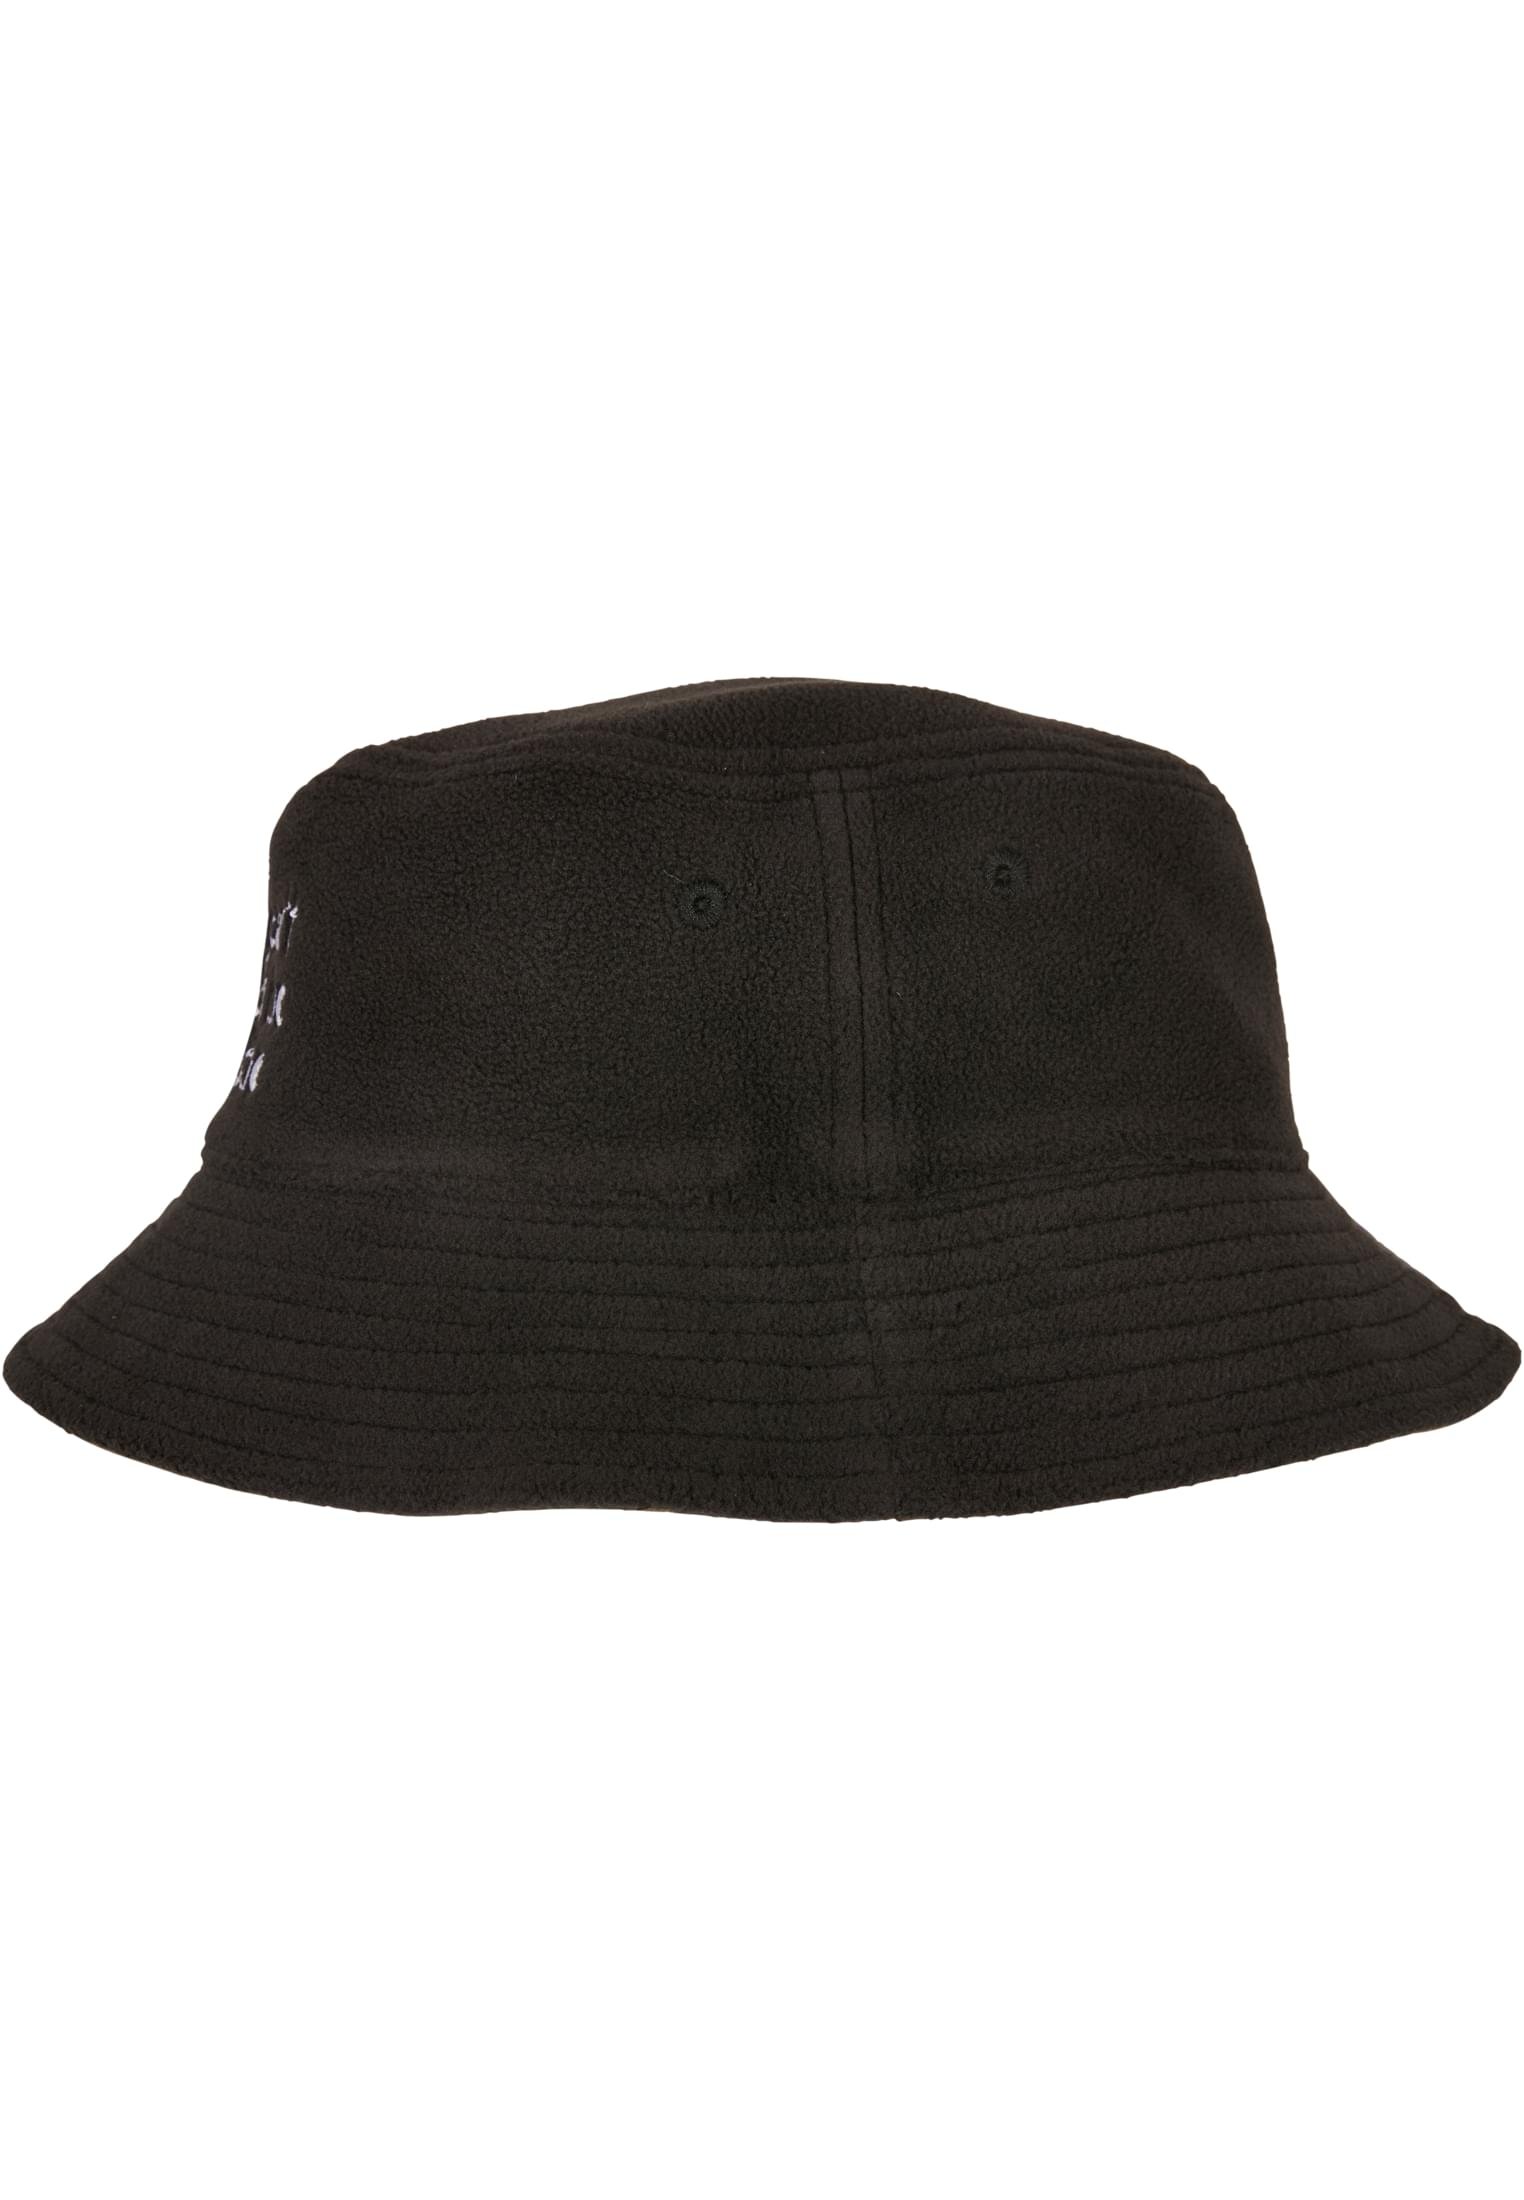 Knock the Hustle Bucket Hat woodland/black one size